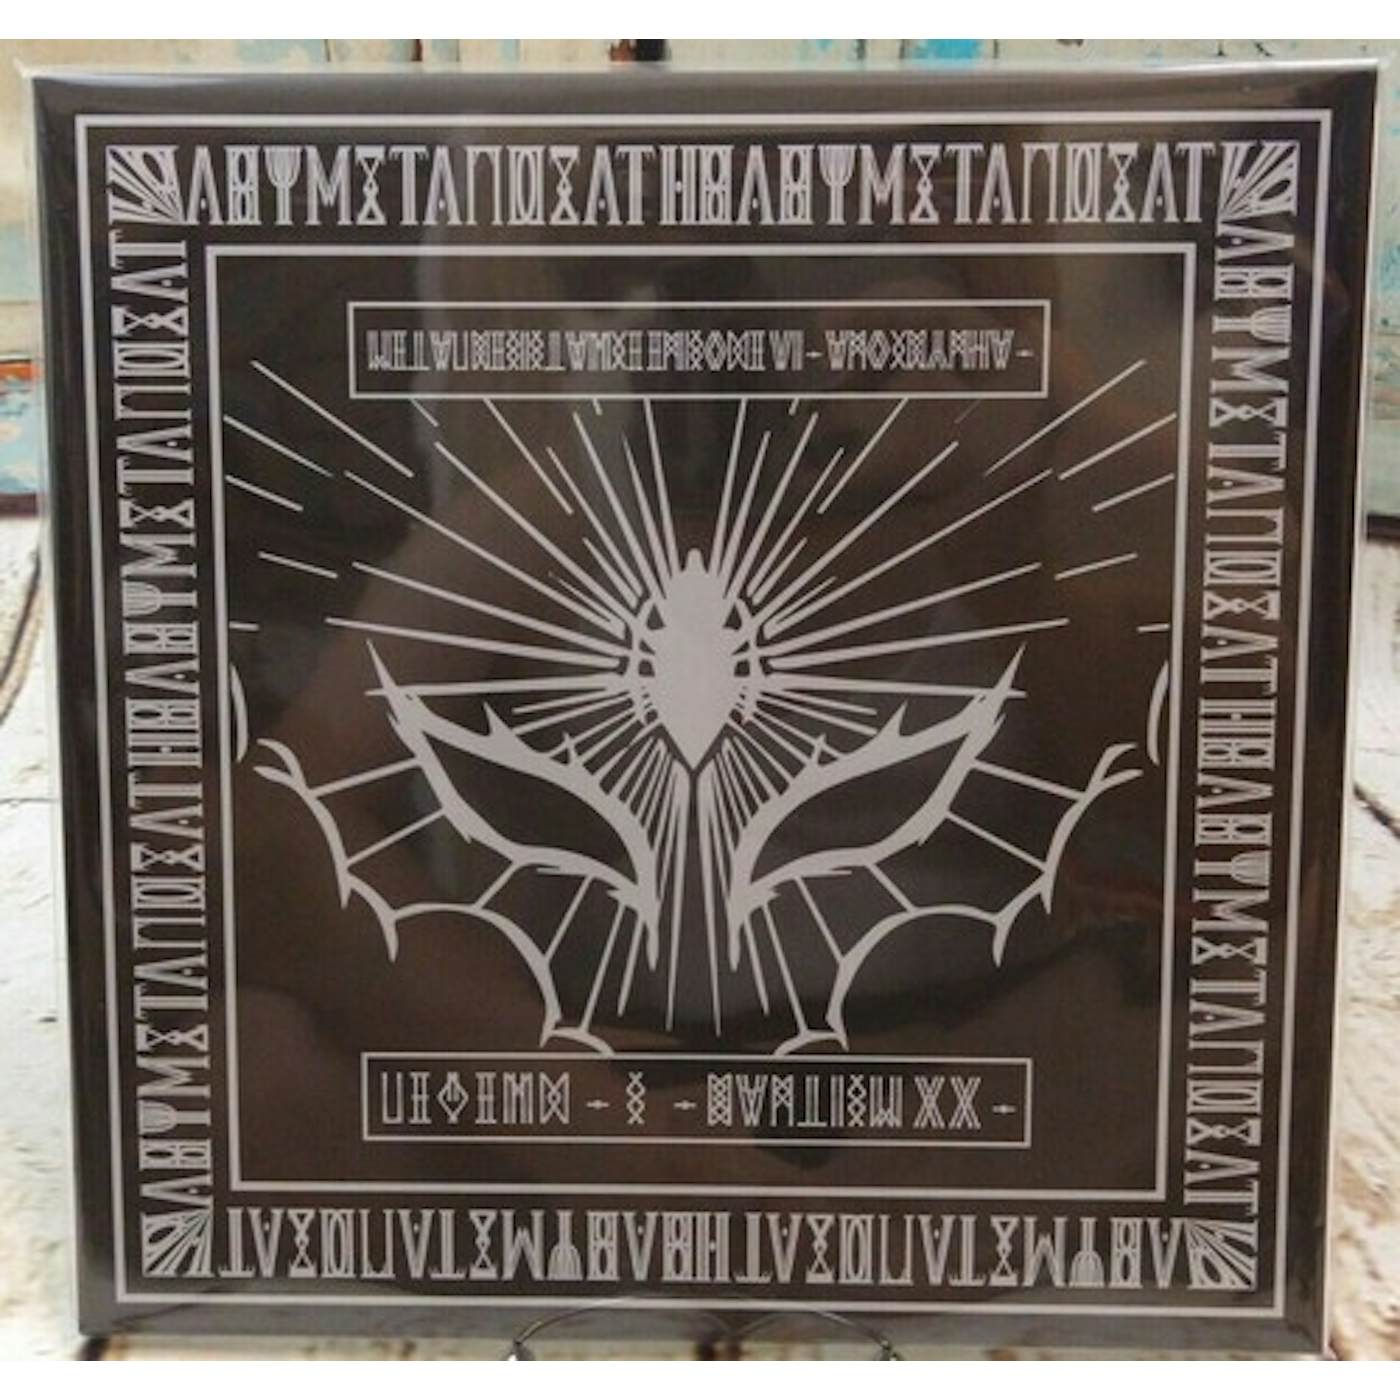 BABYMETAL LEGEND - S - BAPTISM XX - LIVE AT HIROSHIMA GREEN Vinyl Record